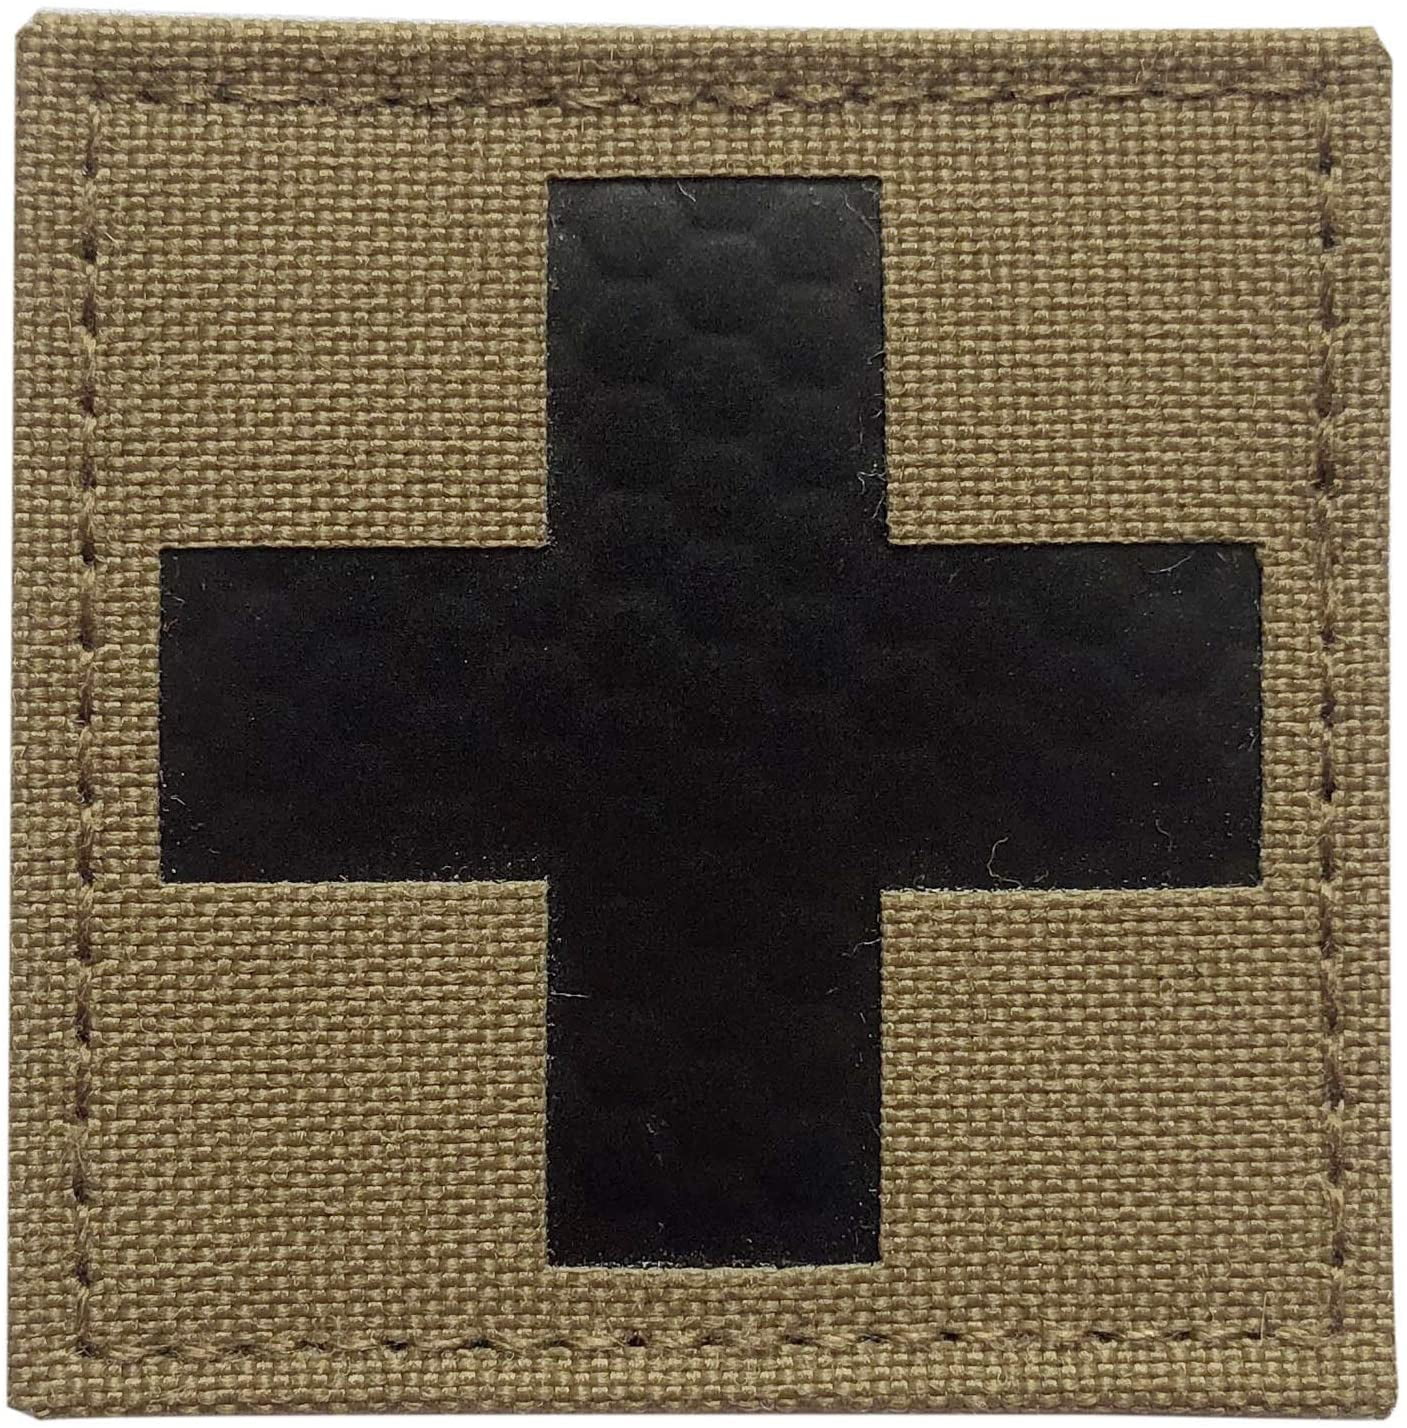 EMT Ems Medic Cross Tactical 2.0 x 2.0 4pcs hook patch Bundle 